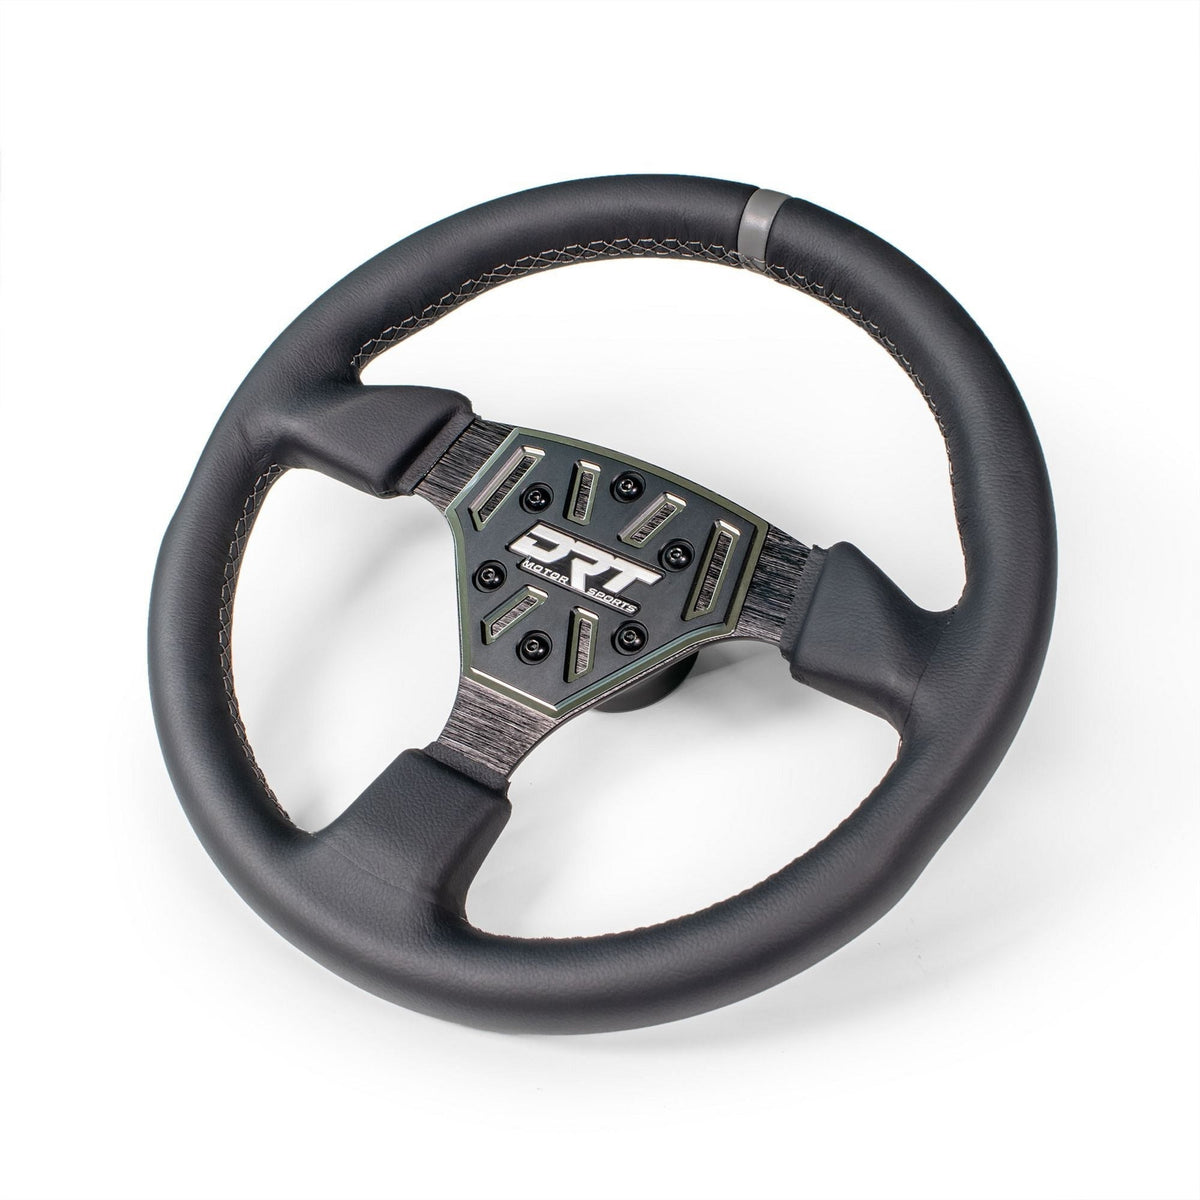 UTV Round Leather Steering Wheel